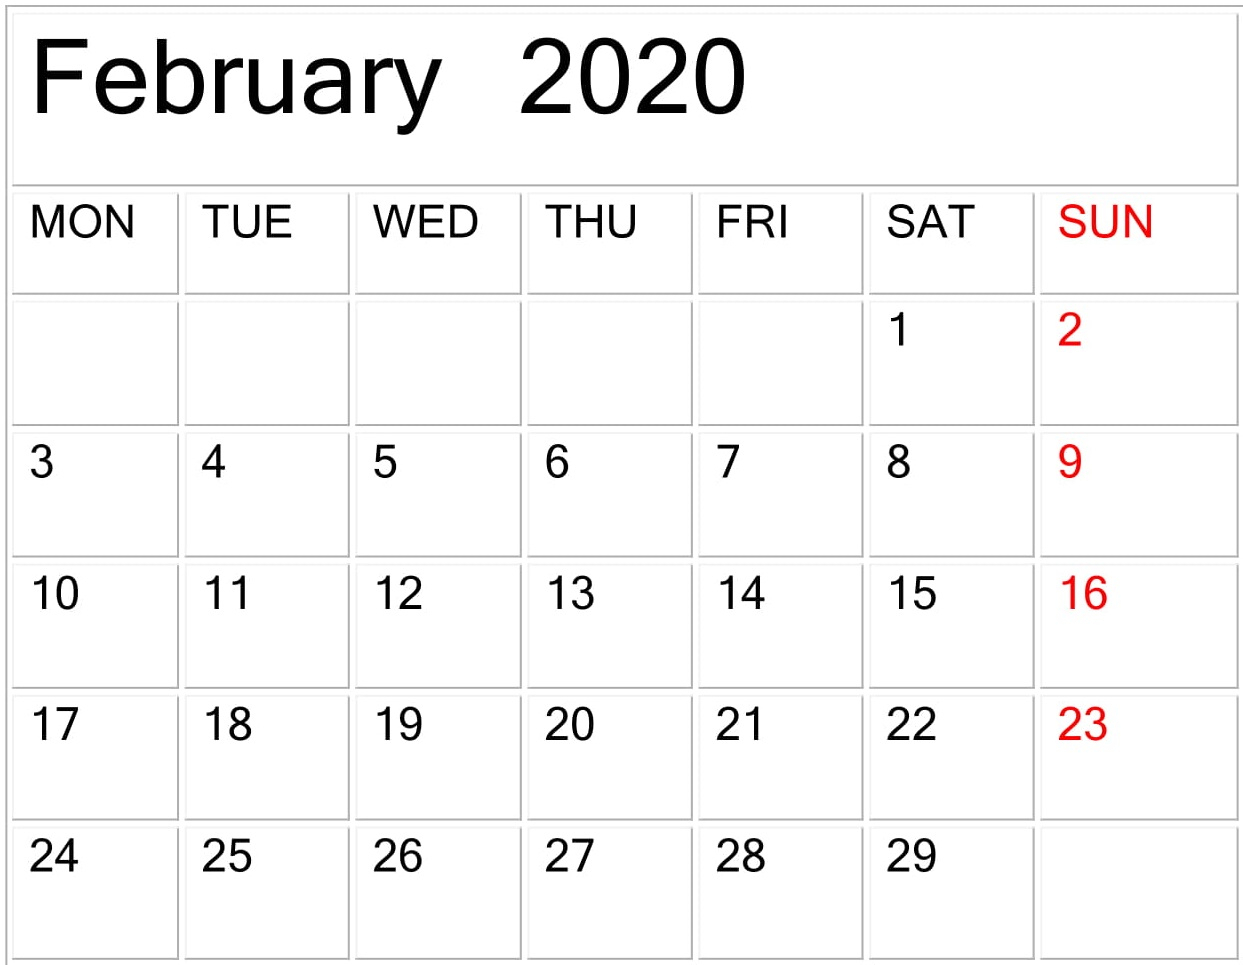 February 2020 Calendar Template Large Print - Latest